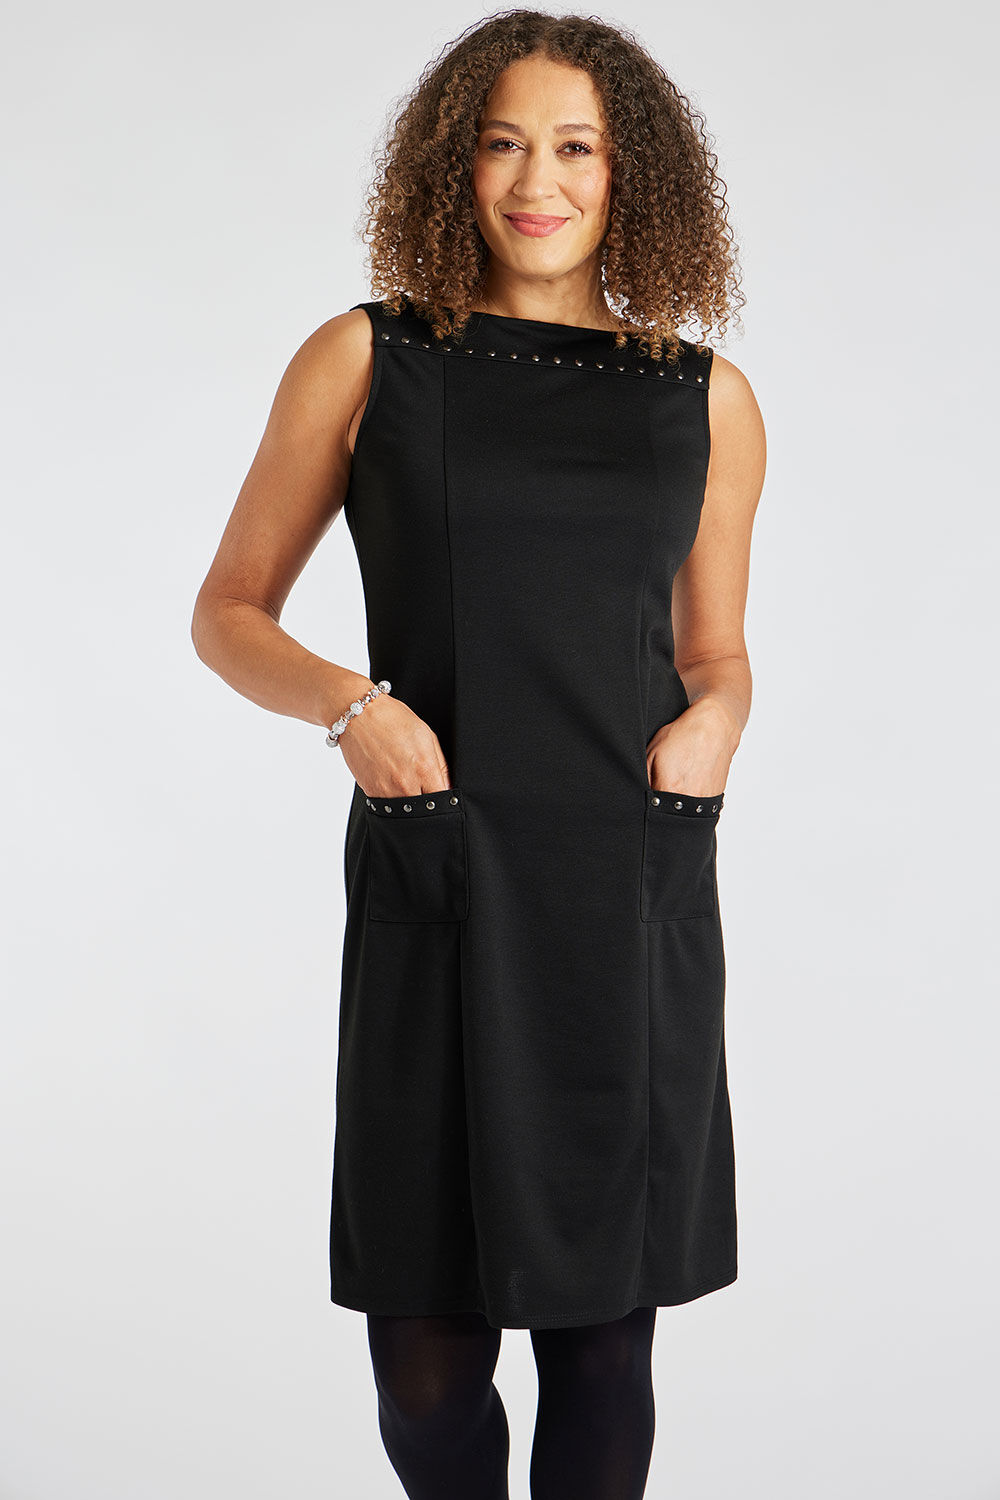 Bonmarche Black Sleeveless Plain Ponte Dress With Stud Detail, Size: 28